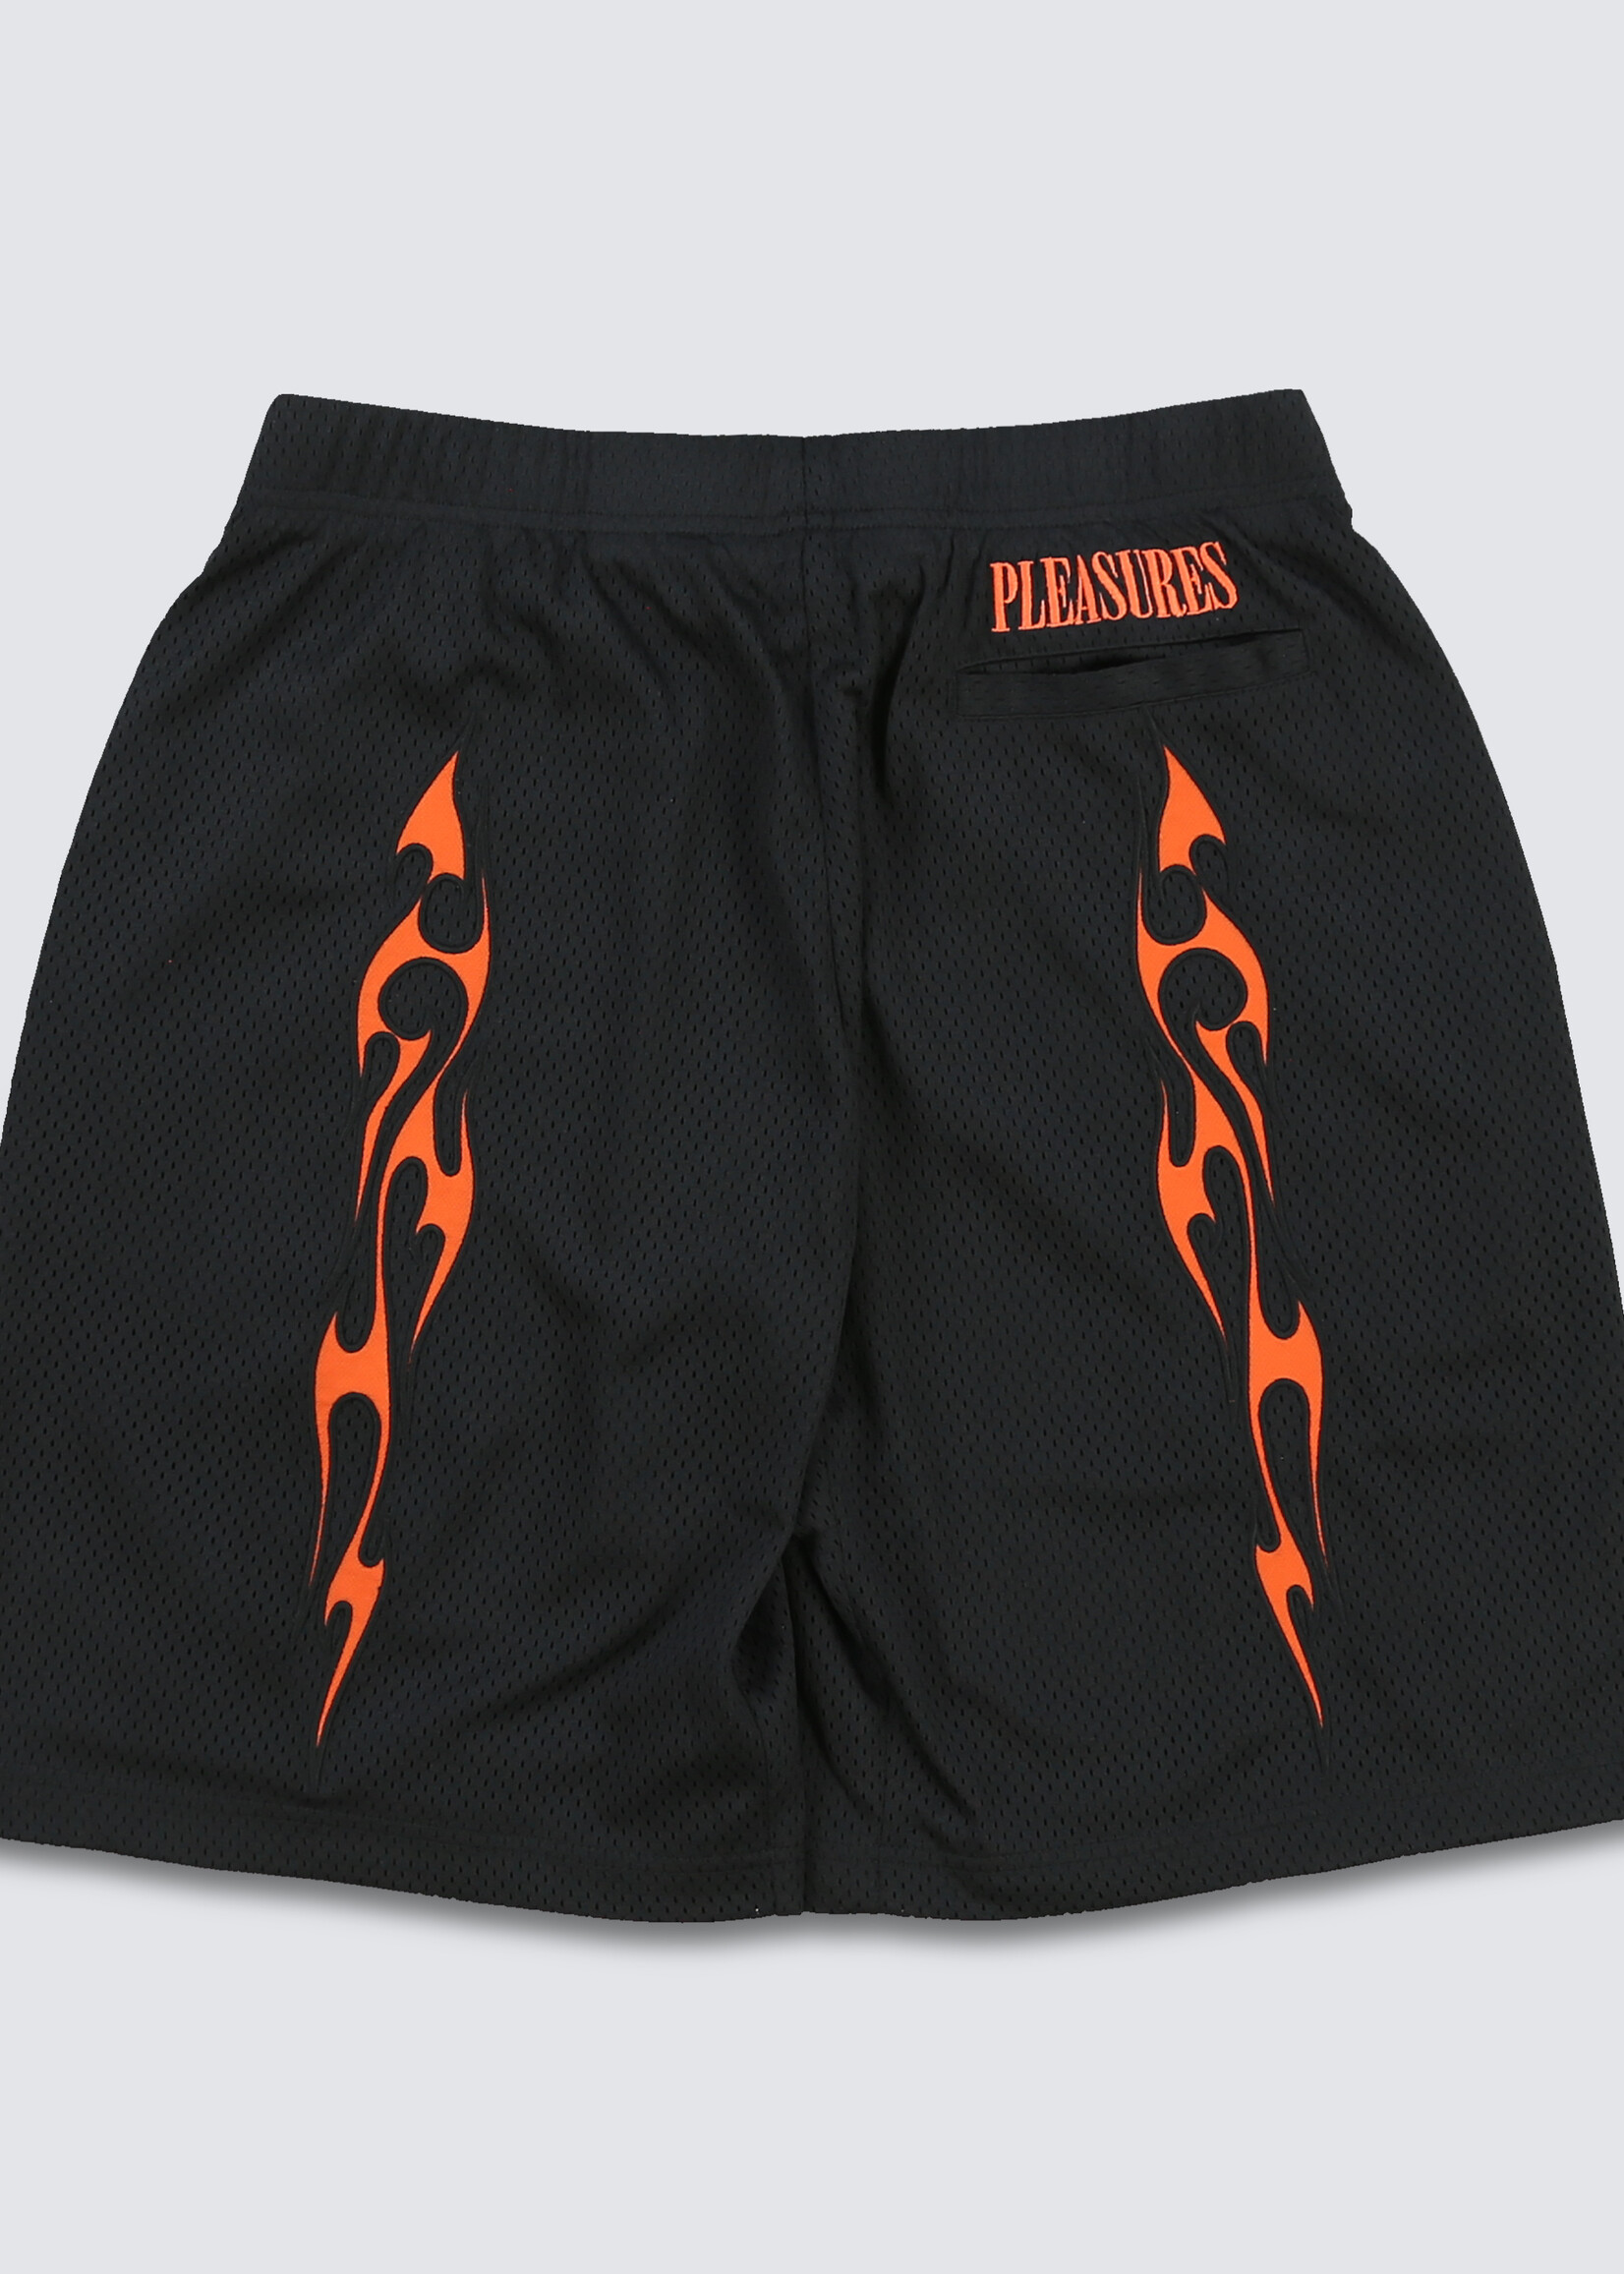 PLEASURES Tribal Flame Mesh Shorts in Black